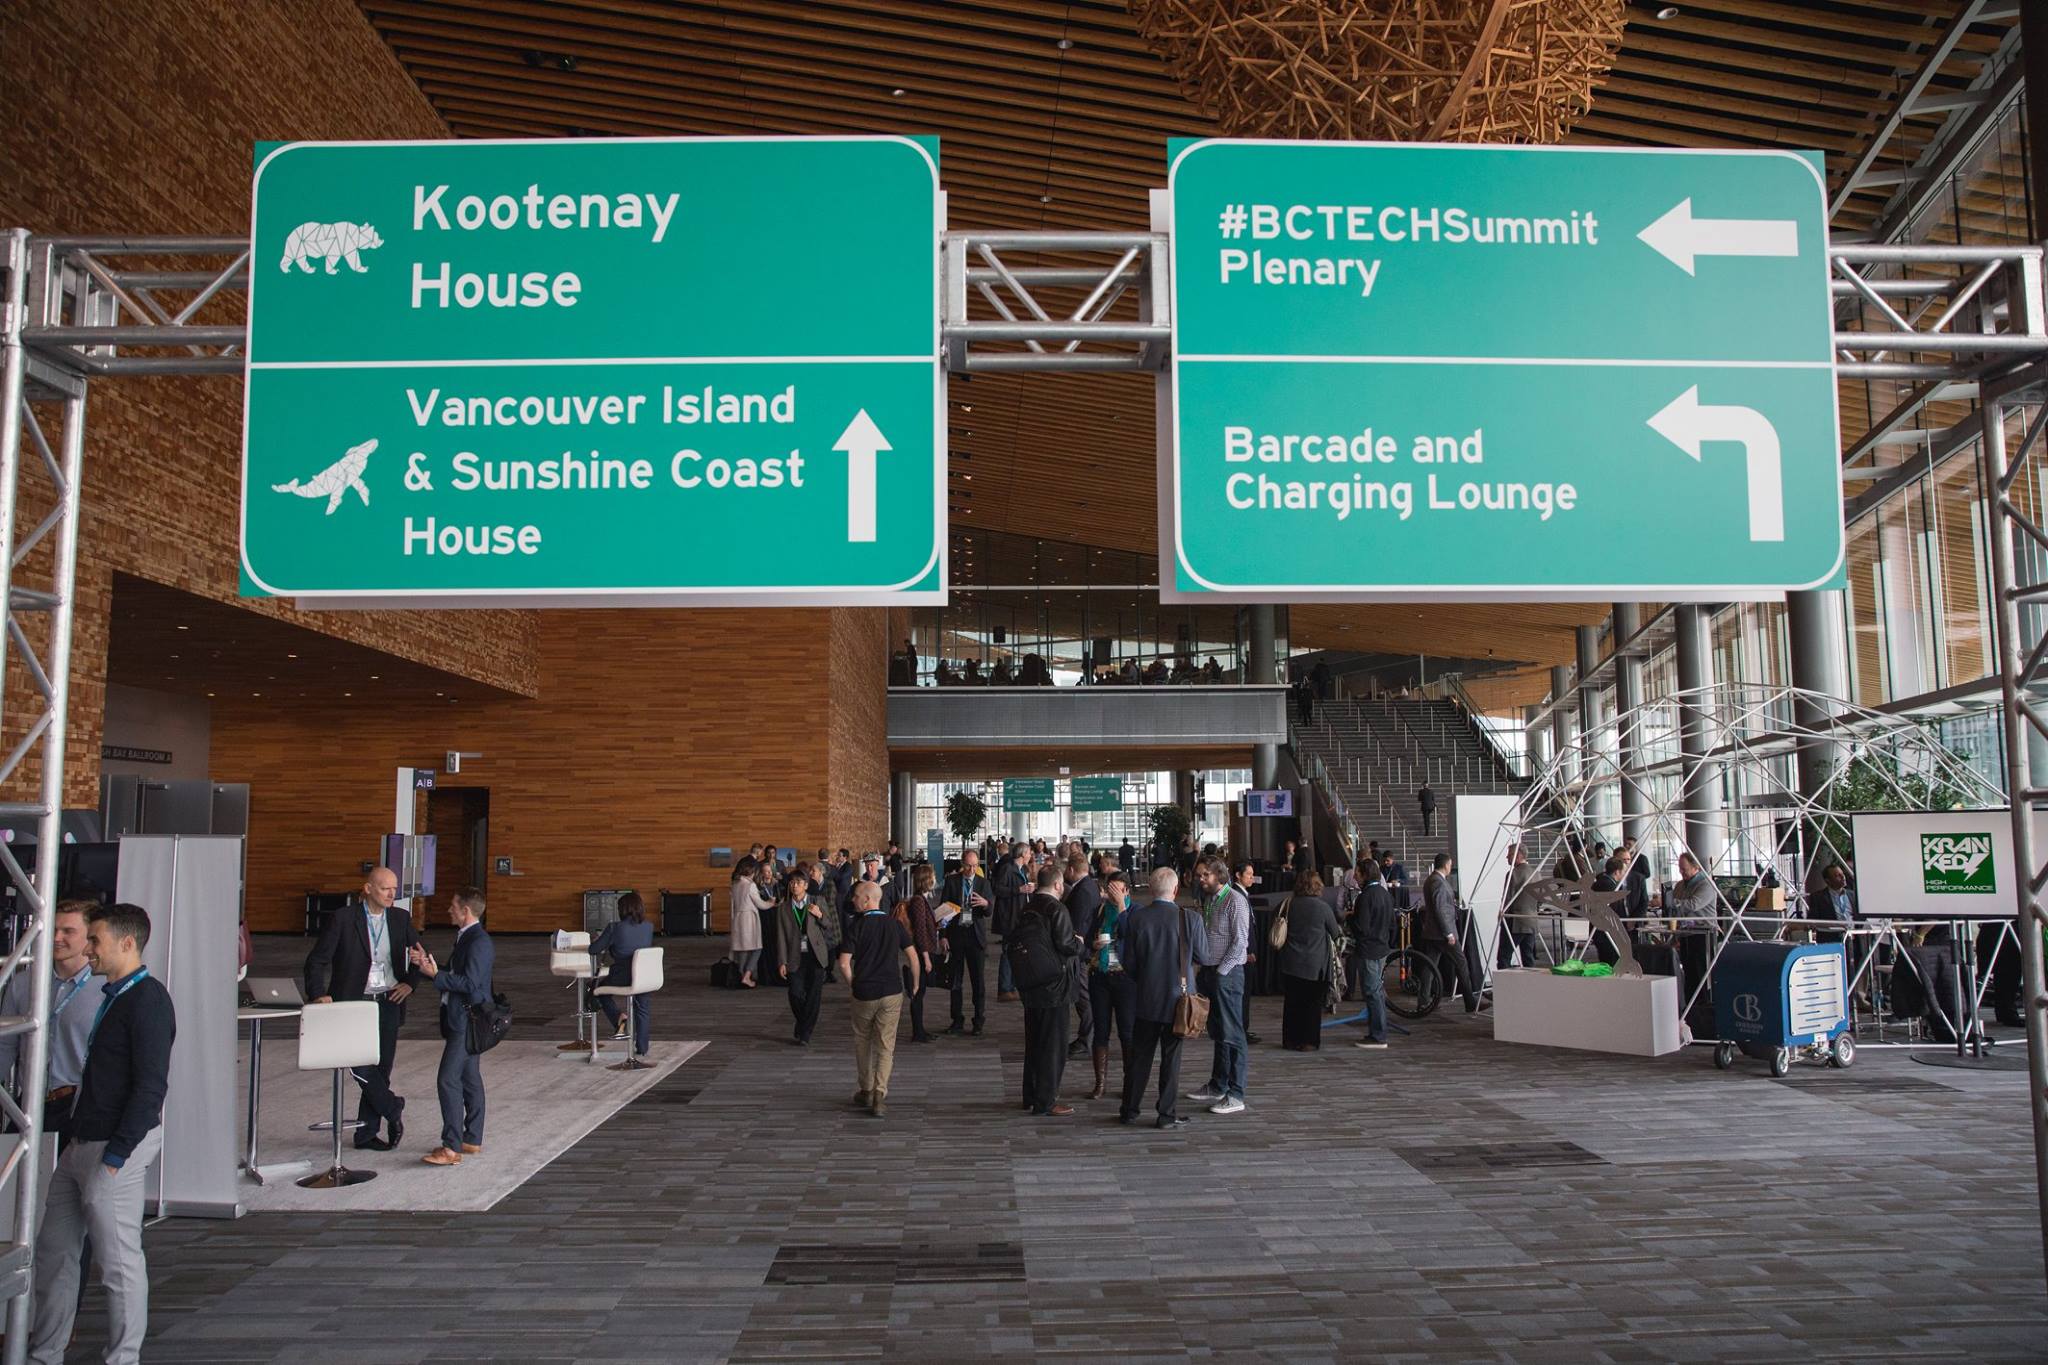 #BCTech Summit Sign